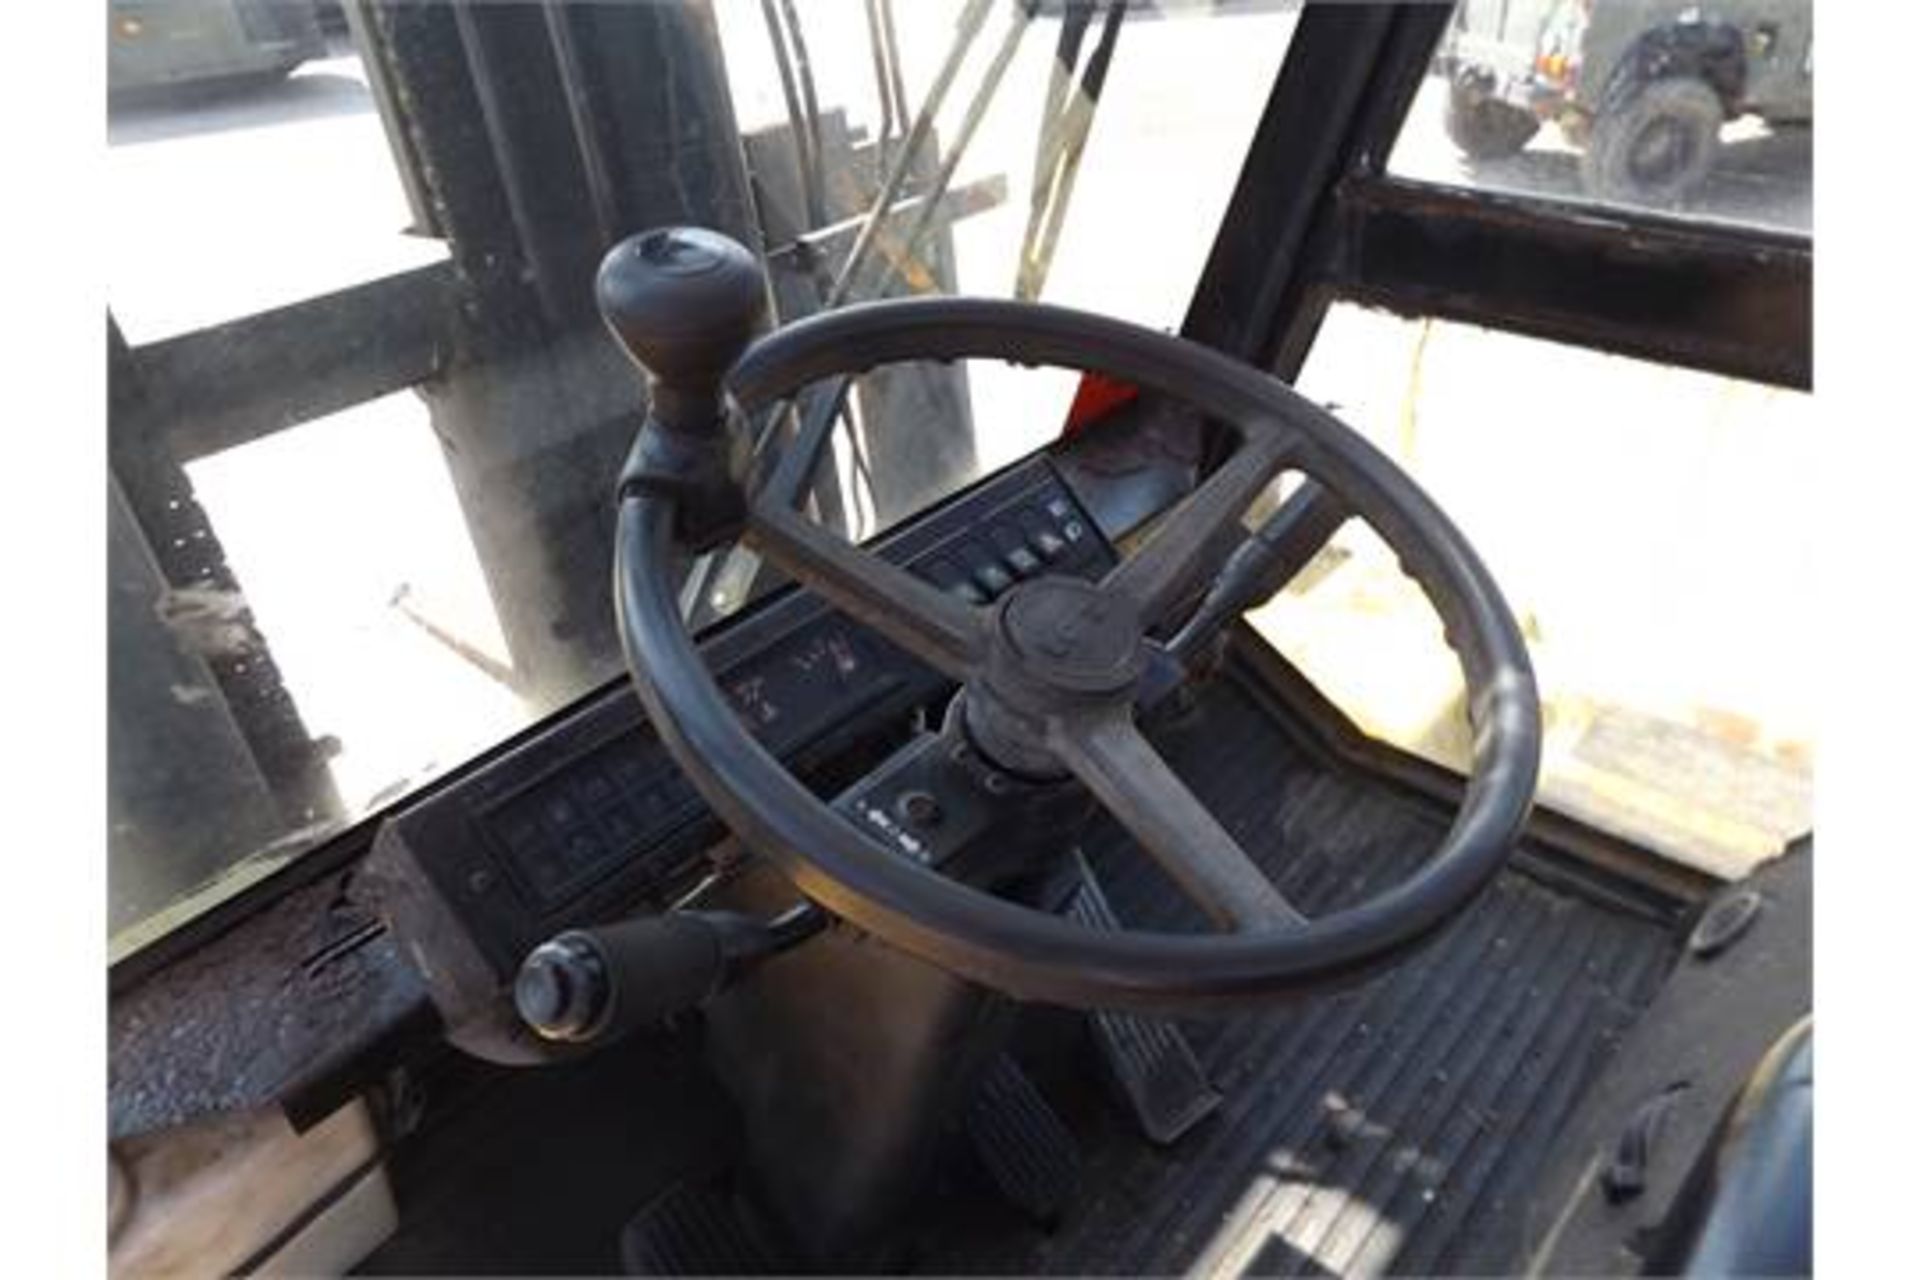 Boss LB1612 15 tonne Counter Balance Diesel Forklift - Image 11 of 17